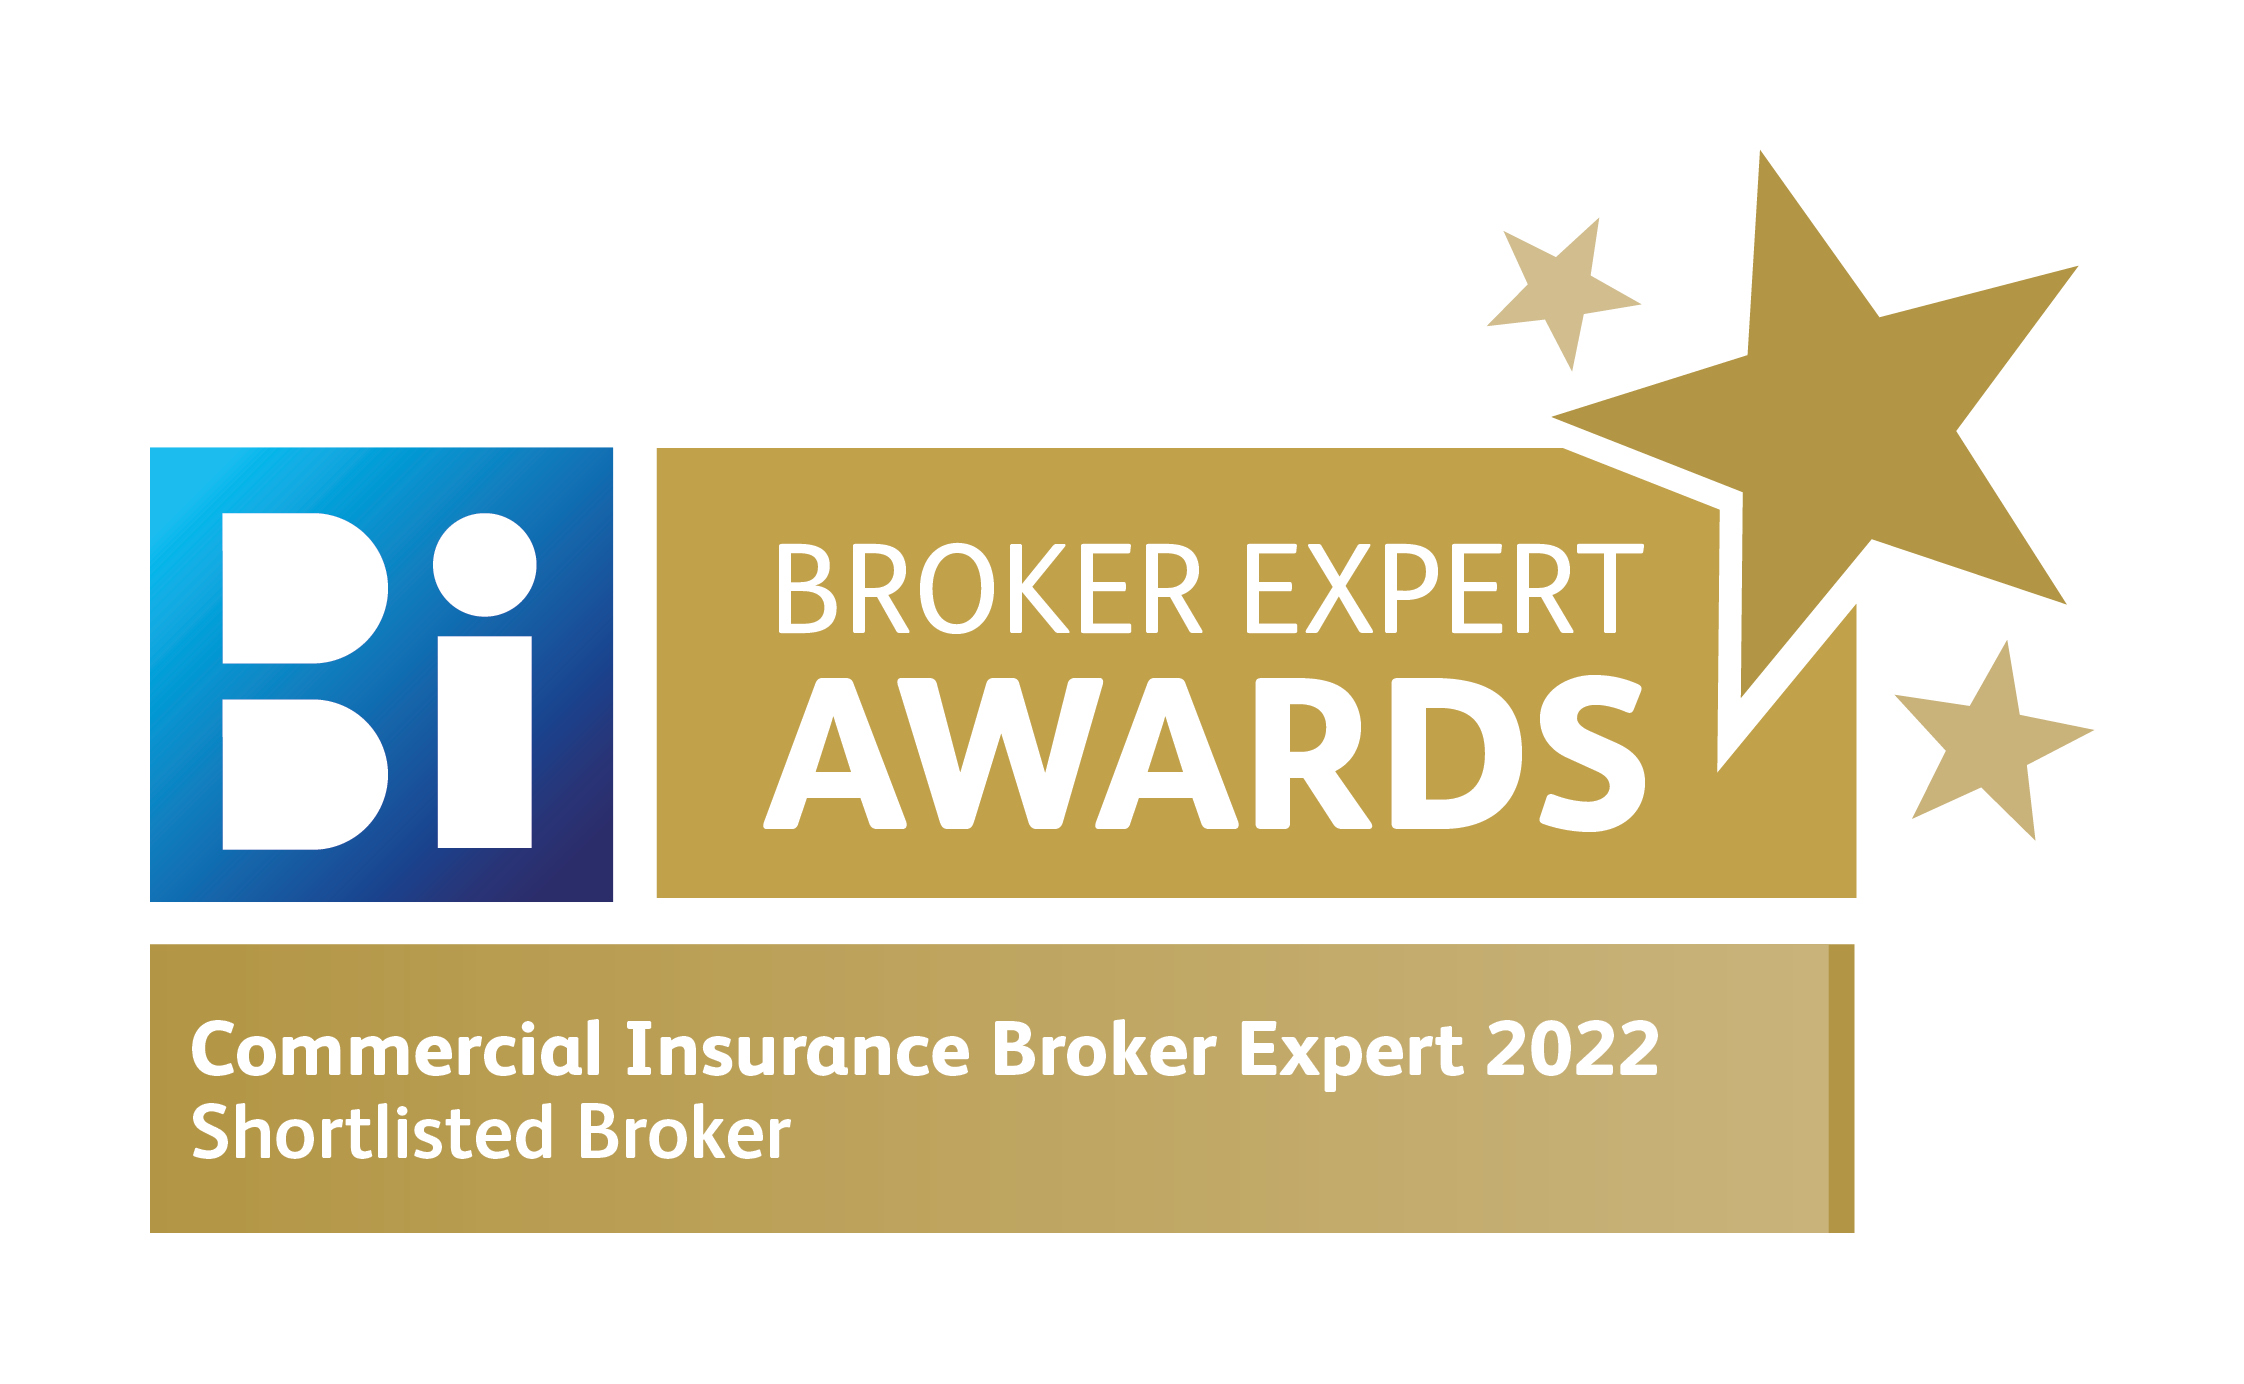 Broker Expert Awards 2022